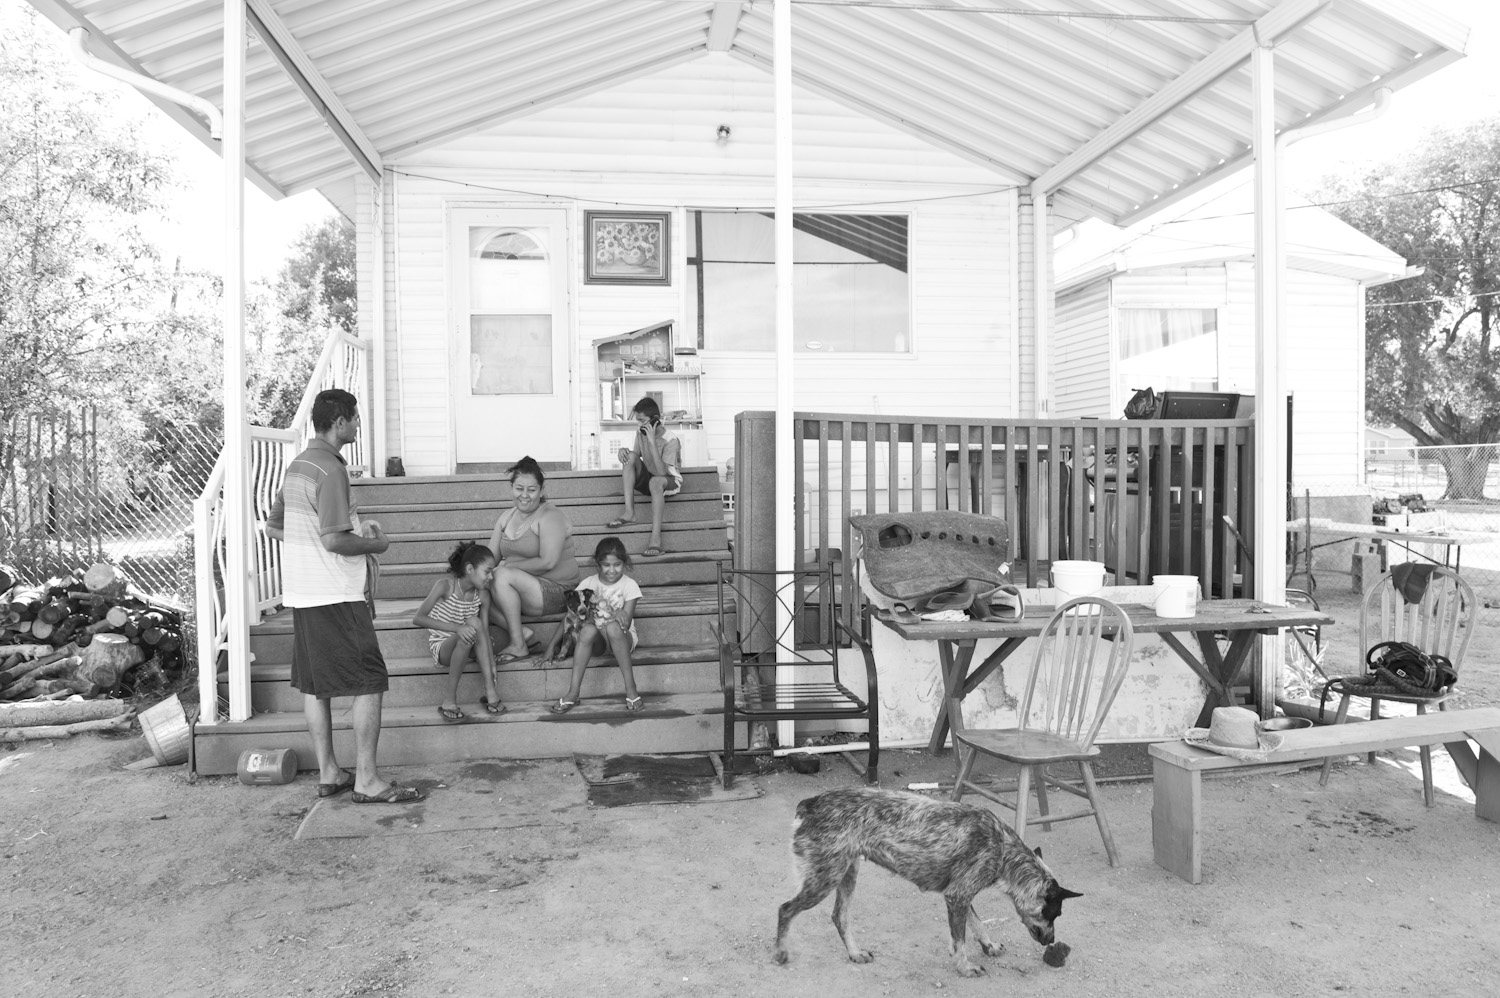  Pimentel family at their farm home. 